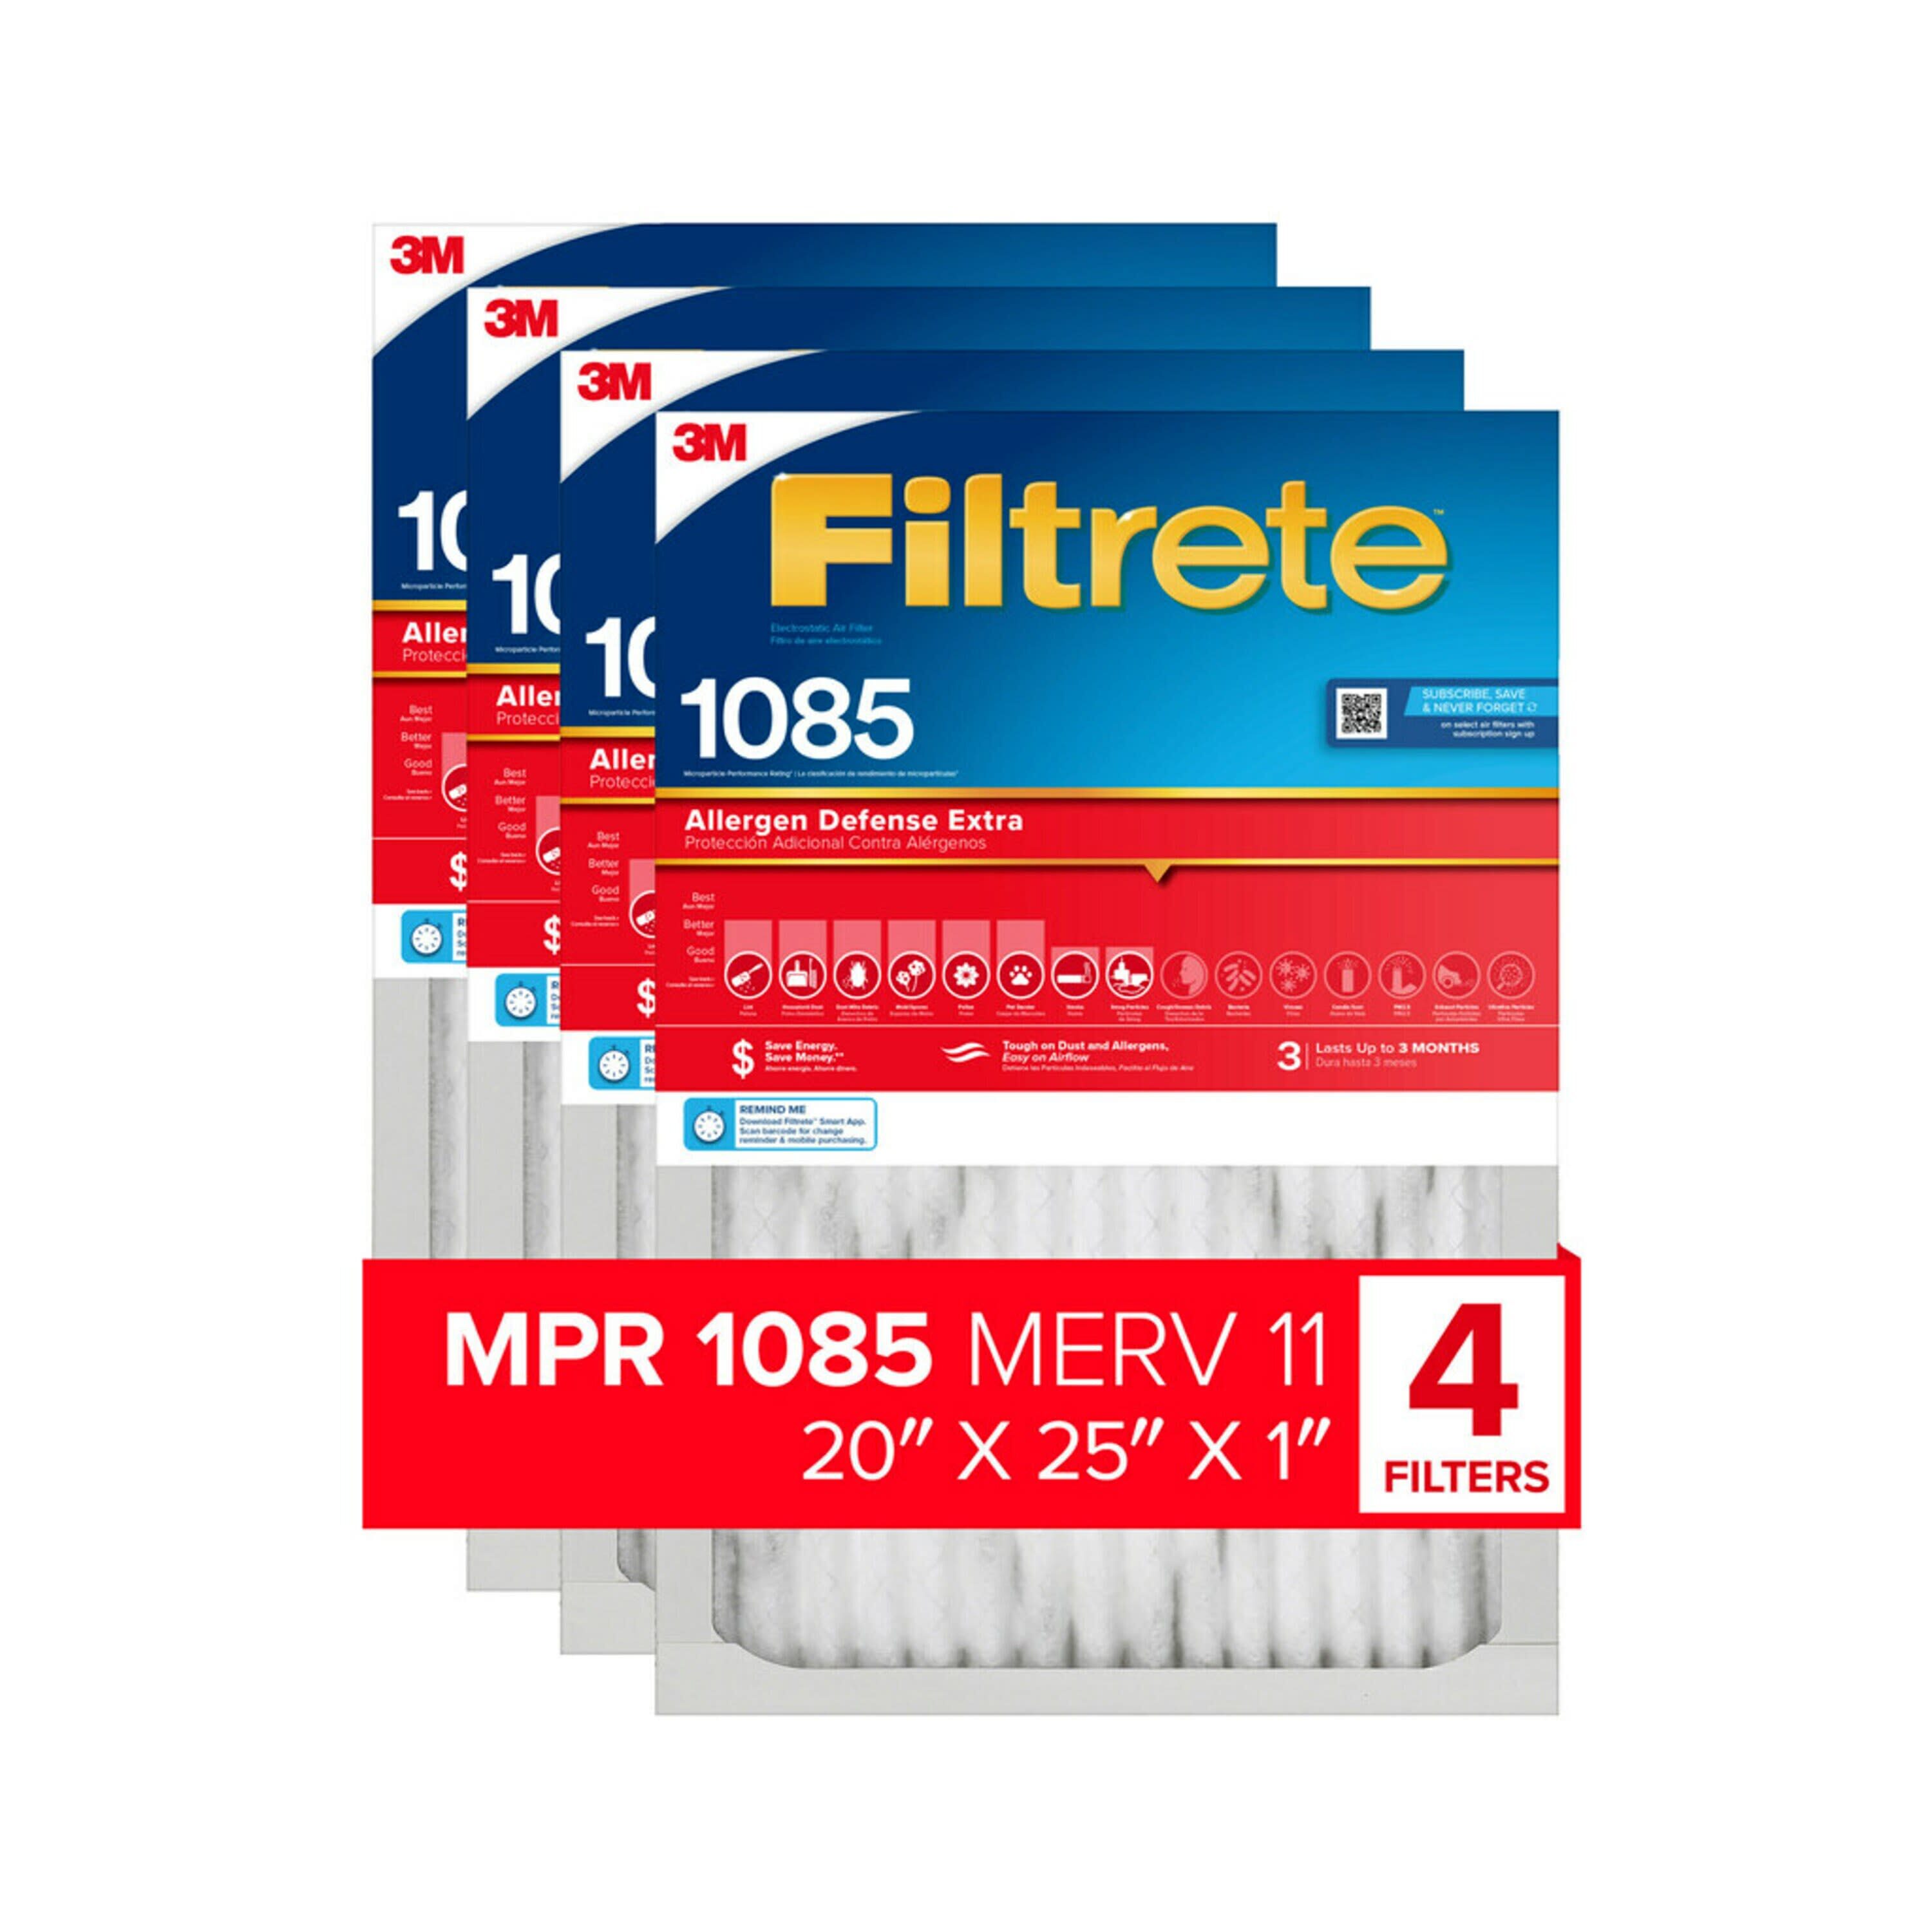 20-in W x 25-in L x 1-in 11 MERV 1085 MPR Allergen Defense Extra Electrostatic Pleated Air Filter (4-Pack) | - Filtrete 1203-4